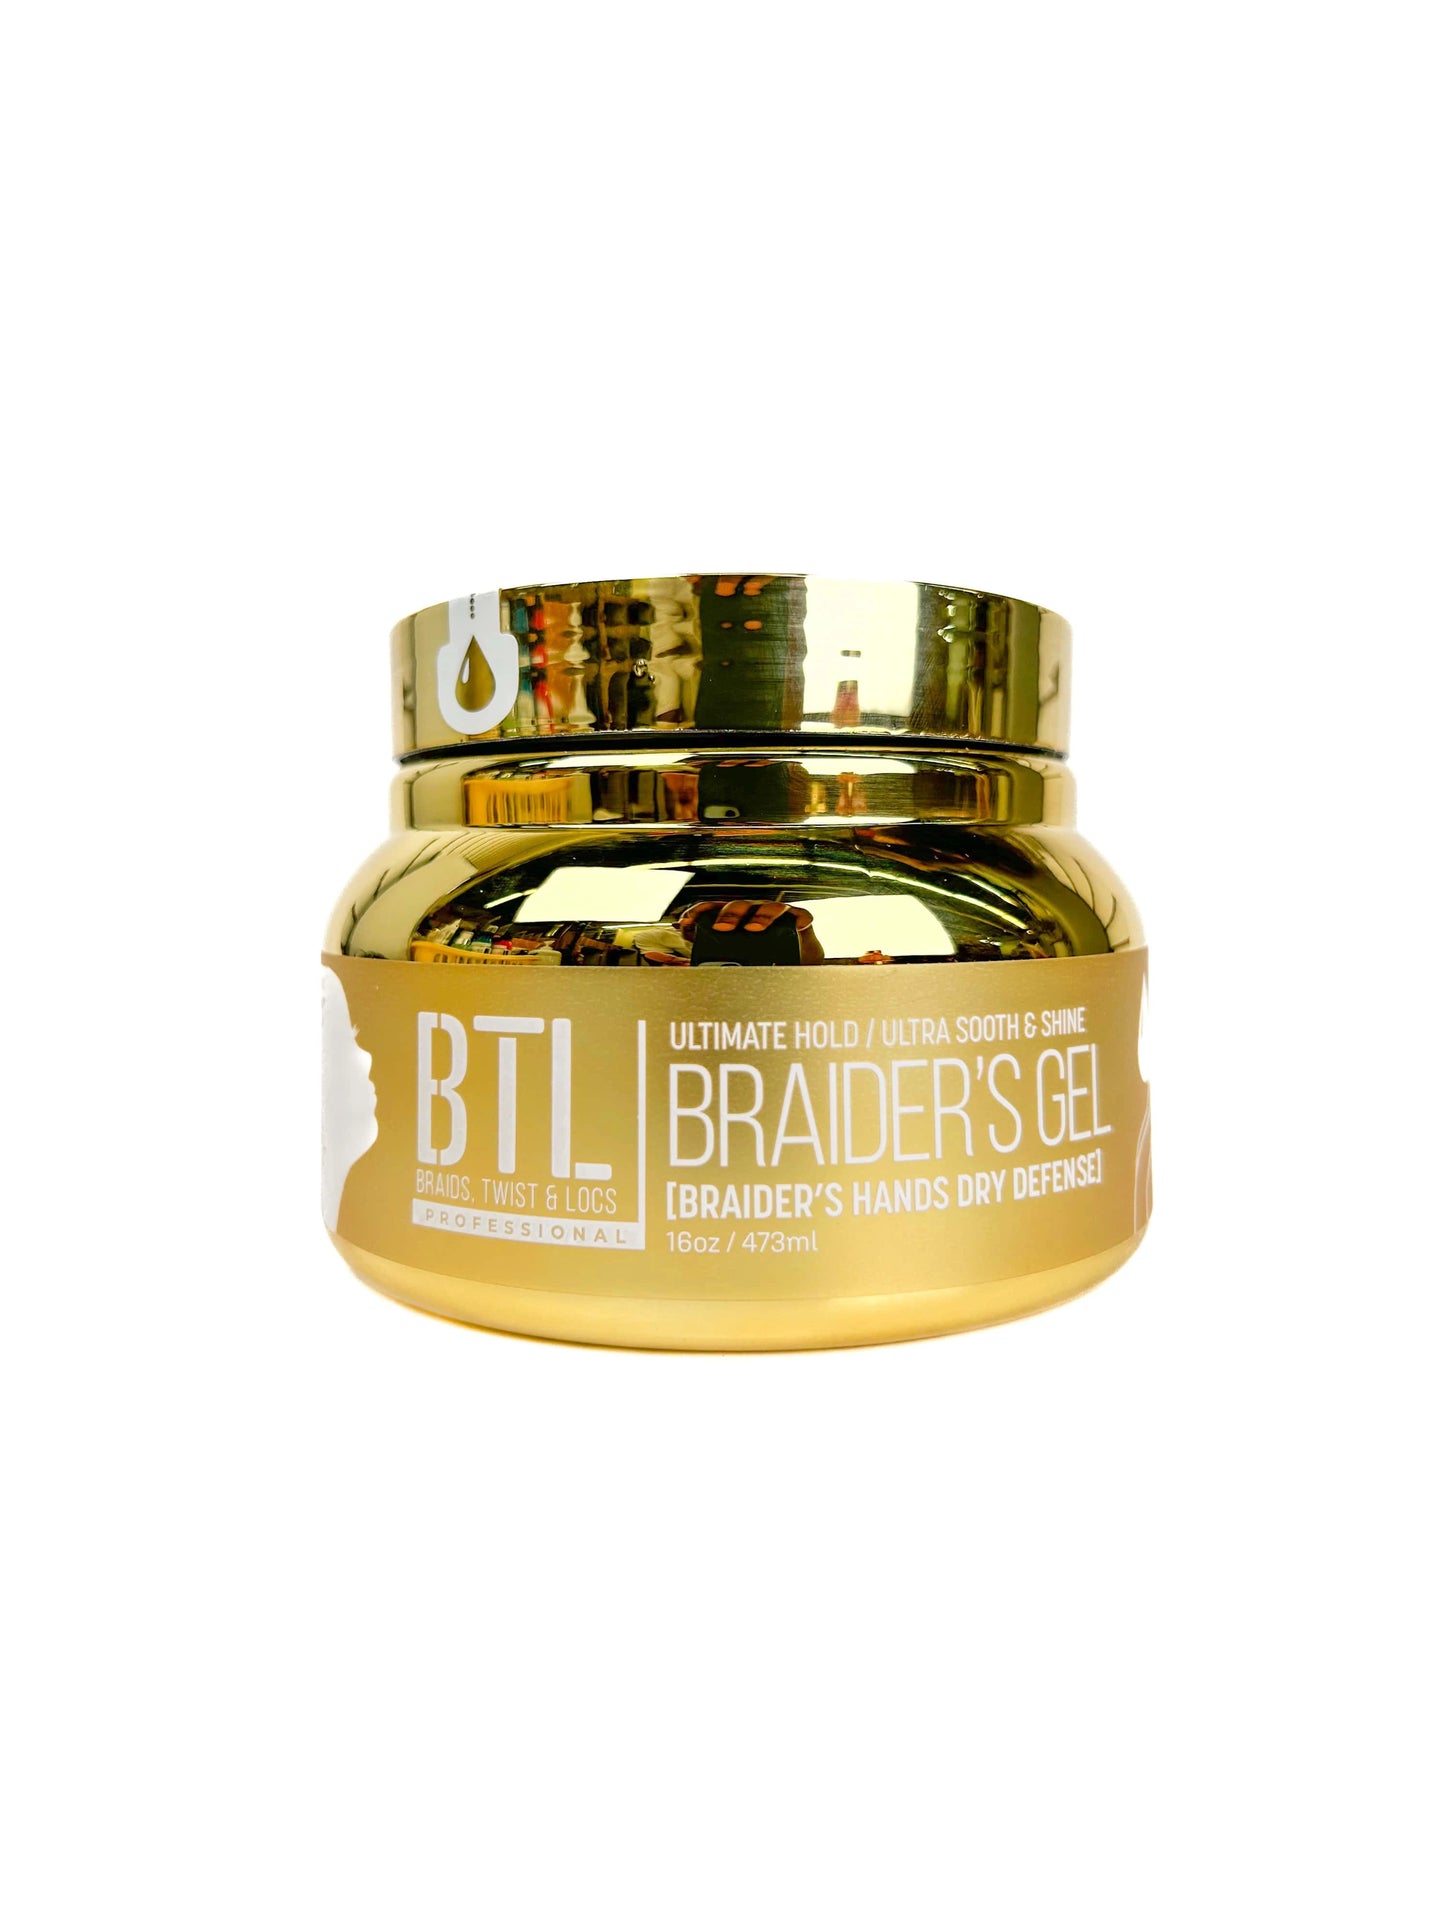 BTL Braider's Gel